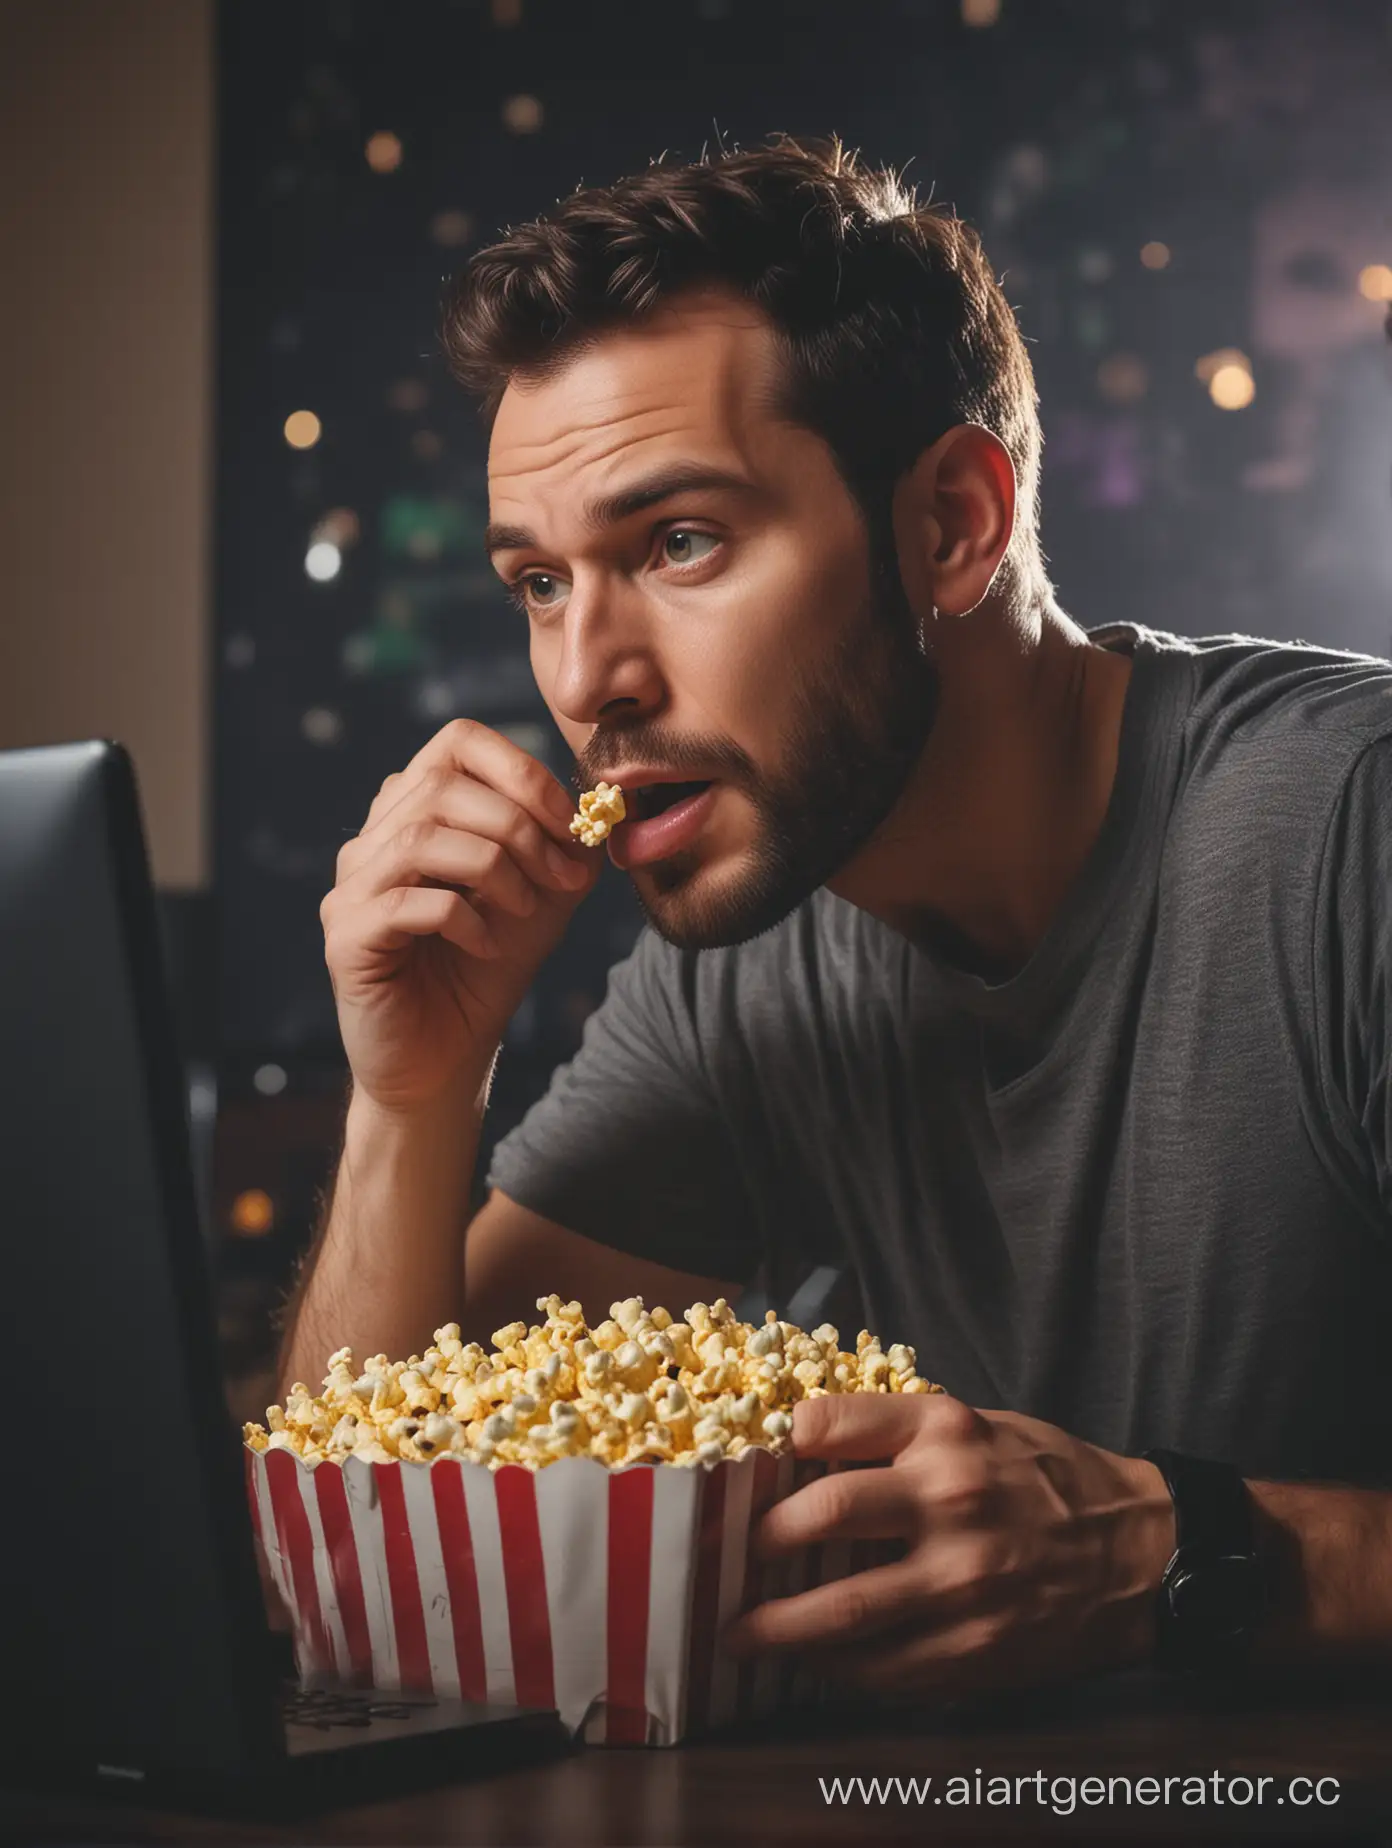 Nighttime-Entertainment-Man-Enjoying-Movie-and-Popcorn-at-Game-Club